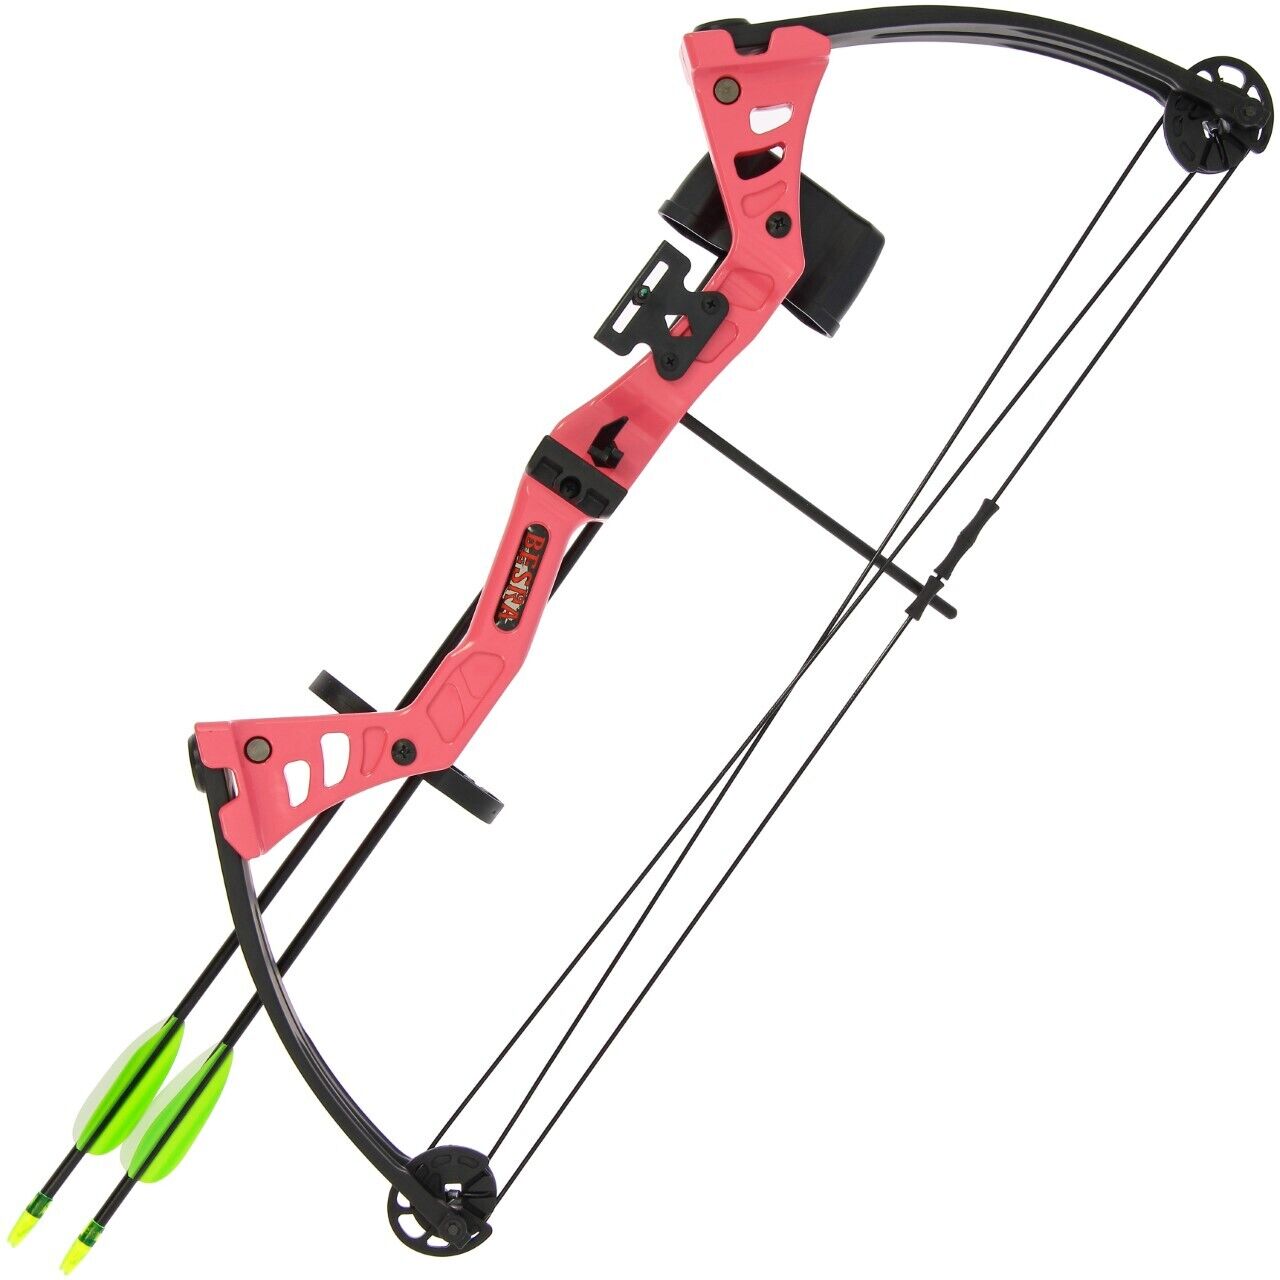 Archery Kit for Adults - Archery Bow & Arrow Set 15-29lbs